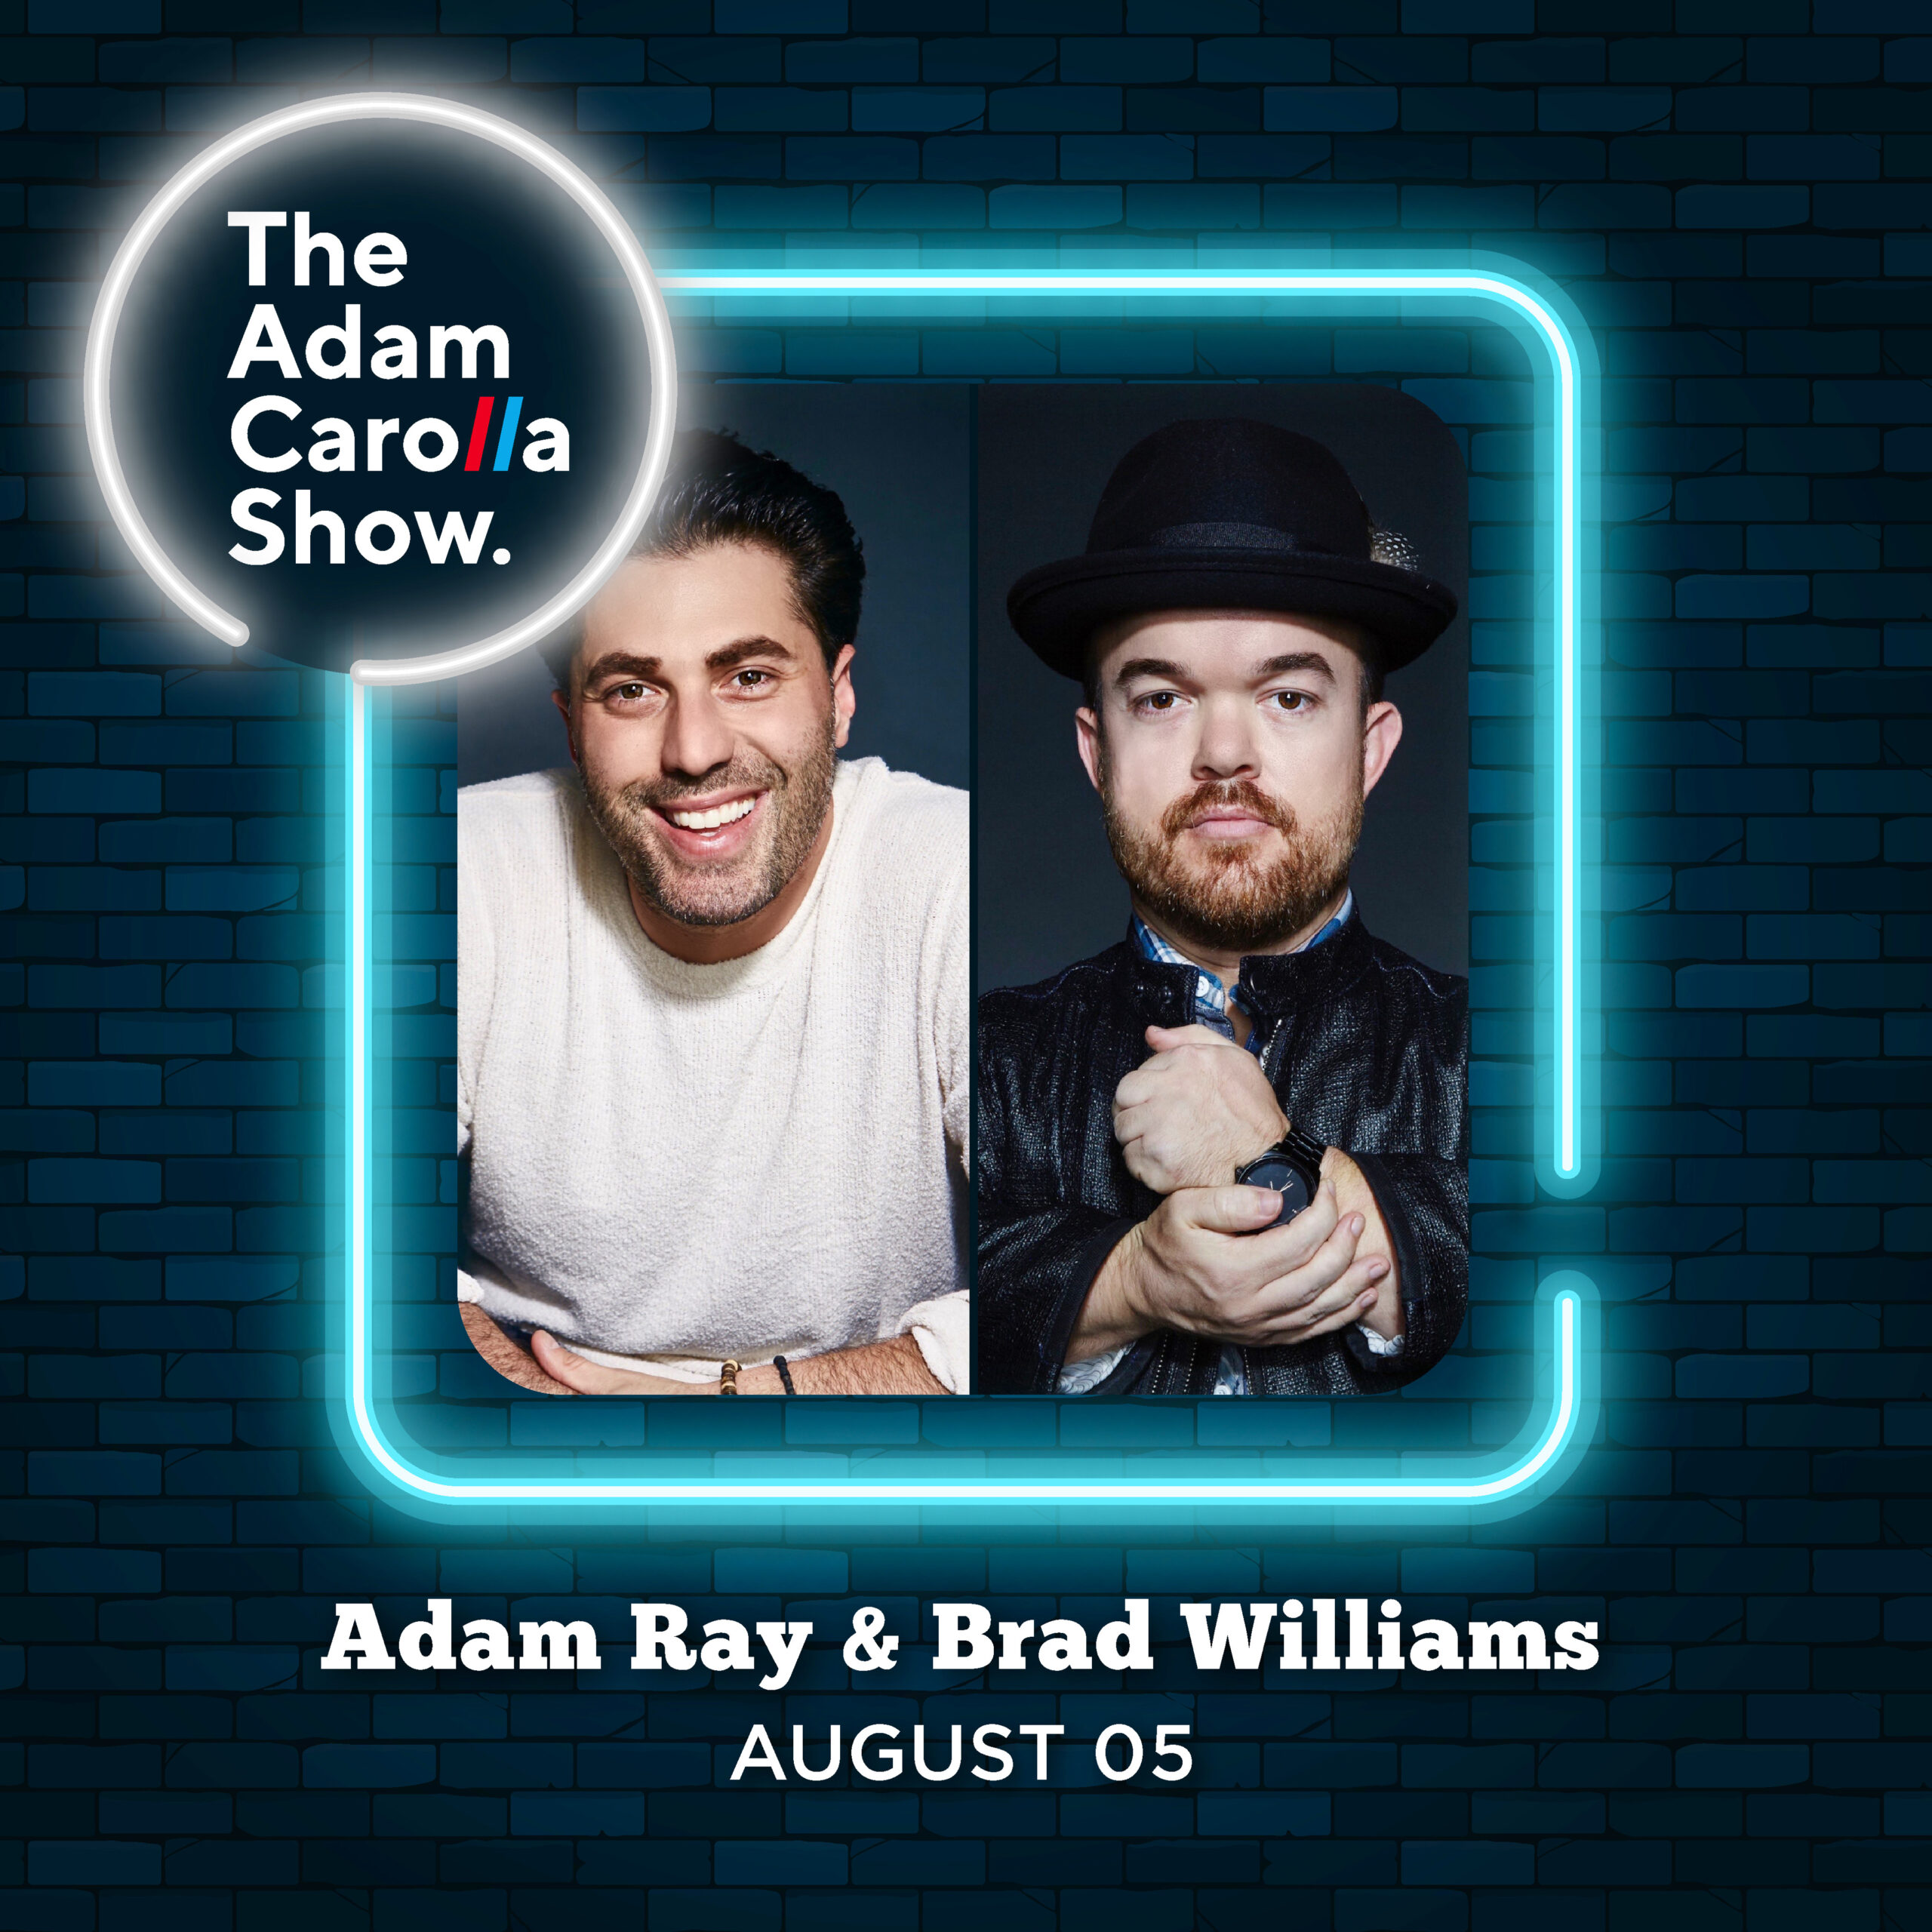 The Adam Carolla Show - A Free Daily Comedy Podcast from Adam Carolla ...